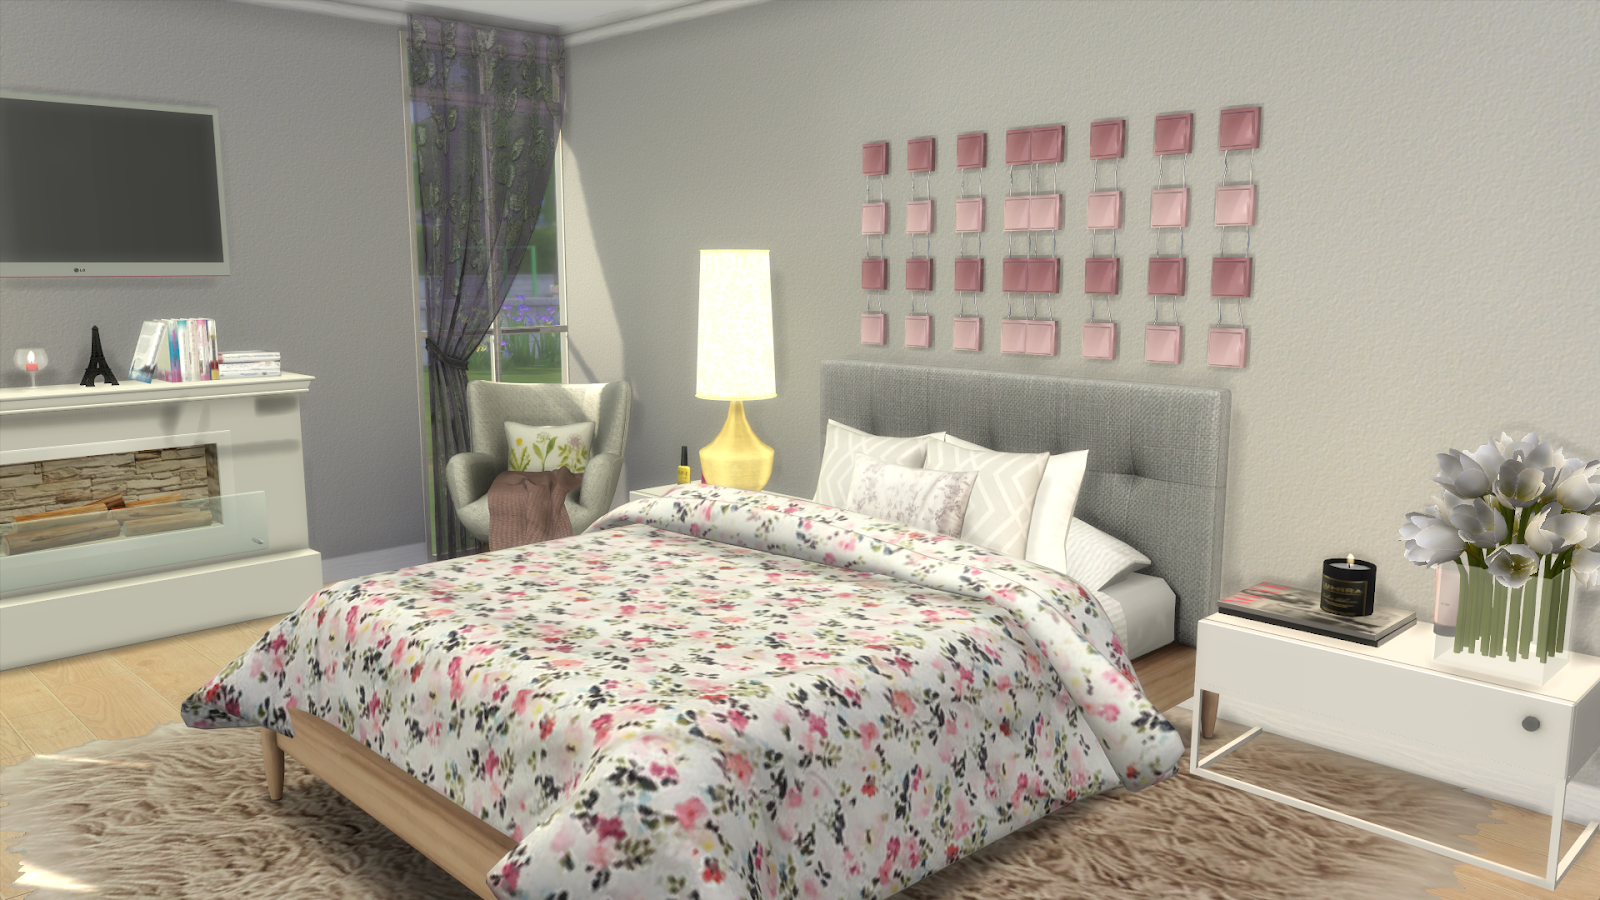 Sims 4 Bedroom Decor Cc